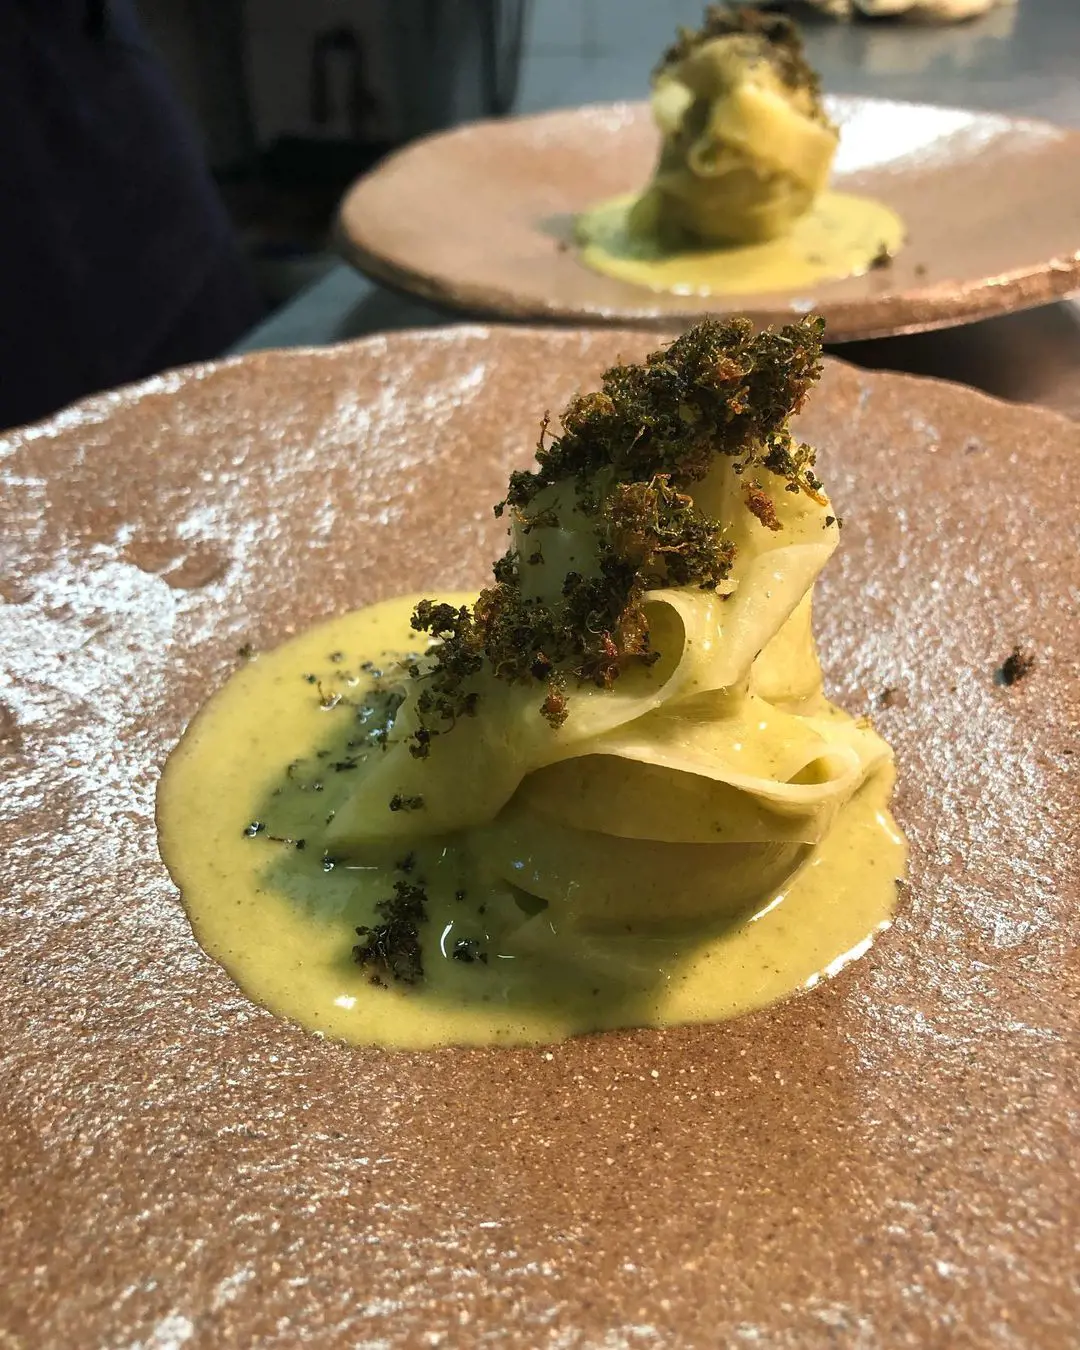 Kohlrabi ‘Tagliatelle’ with Seaweed Butter Sauce & Crispy Broccoli